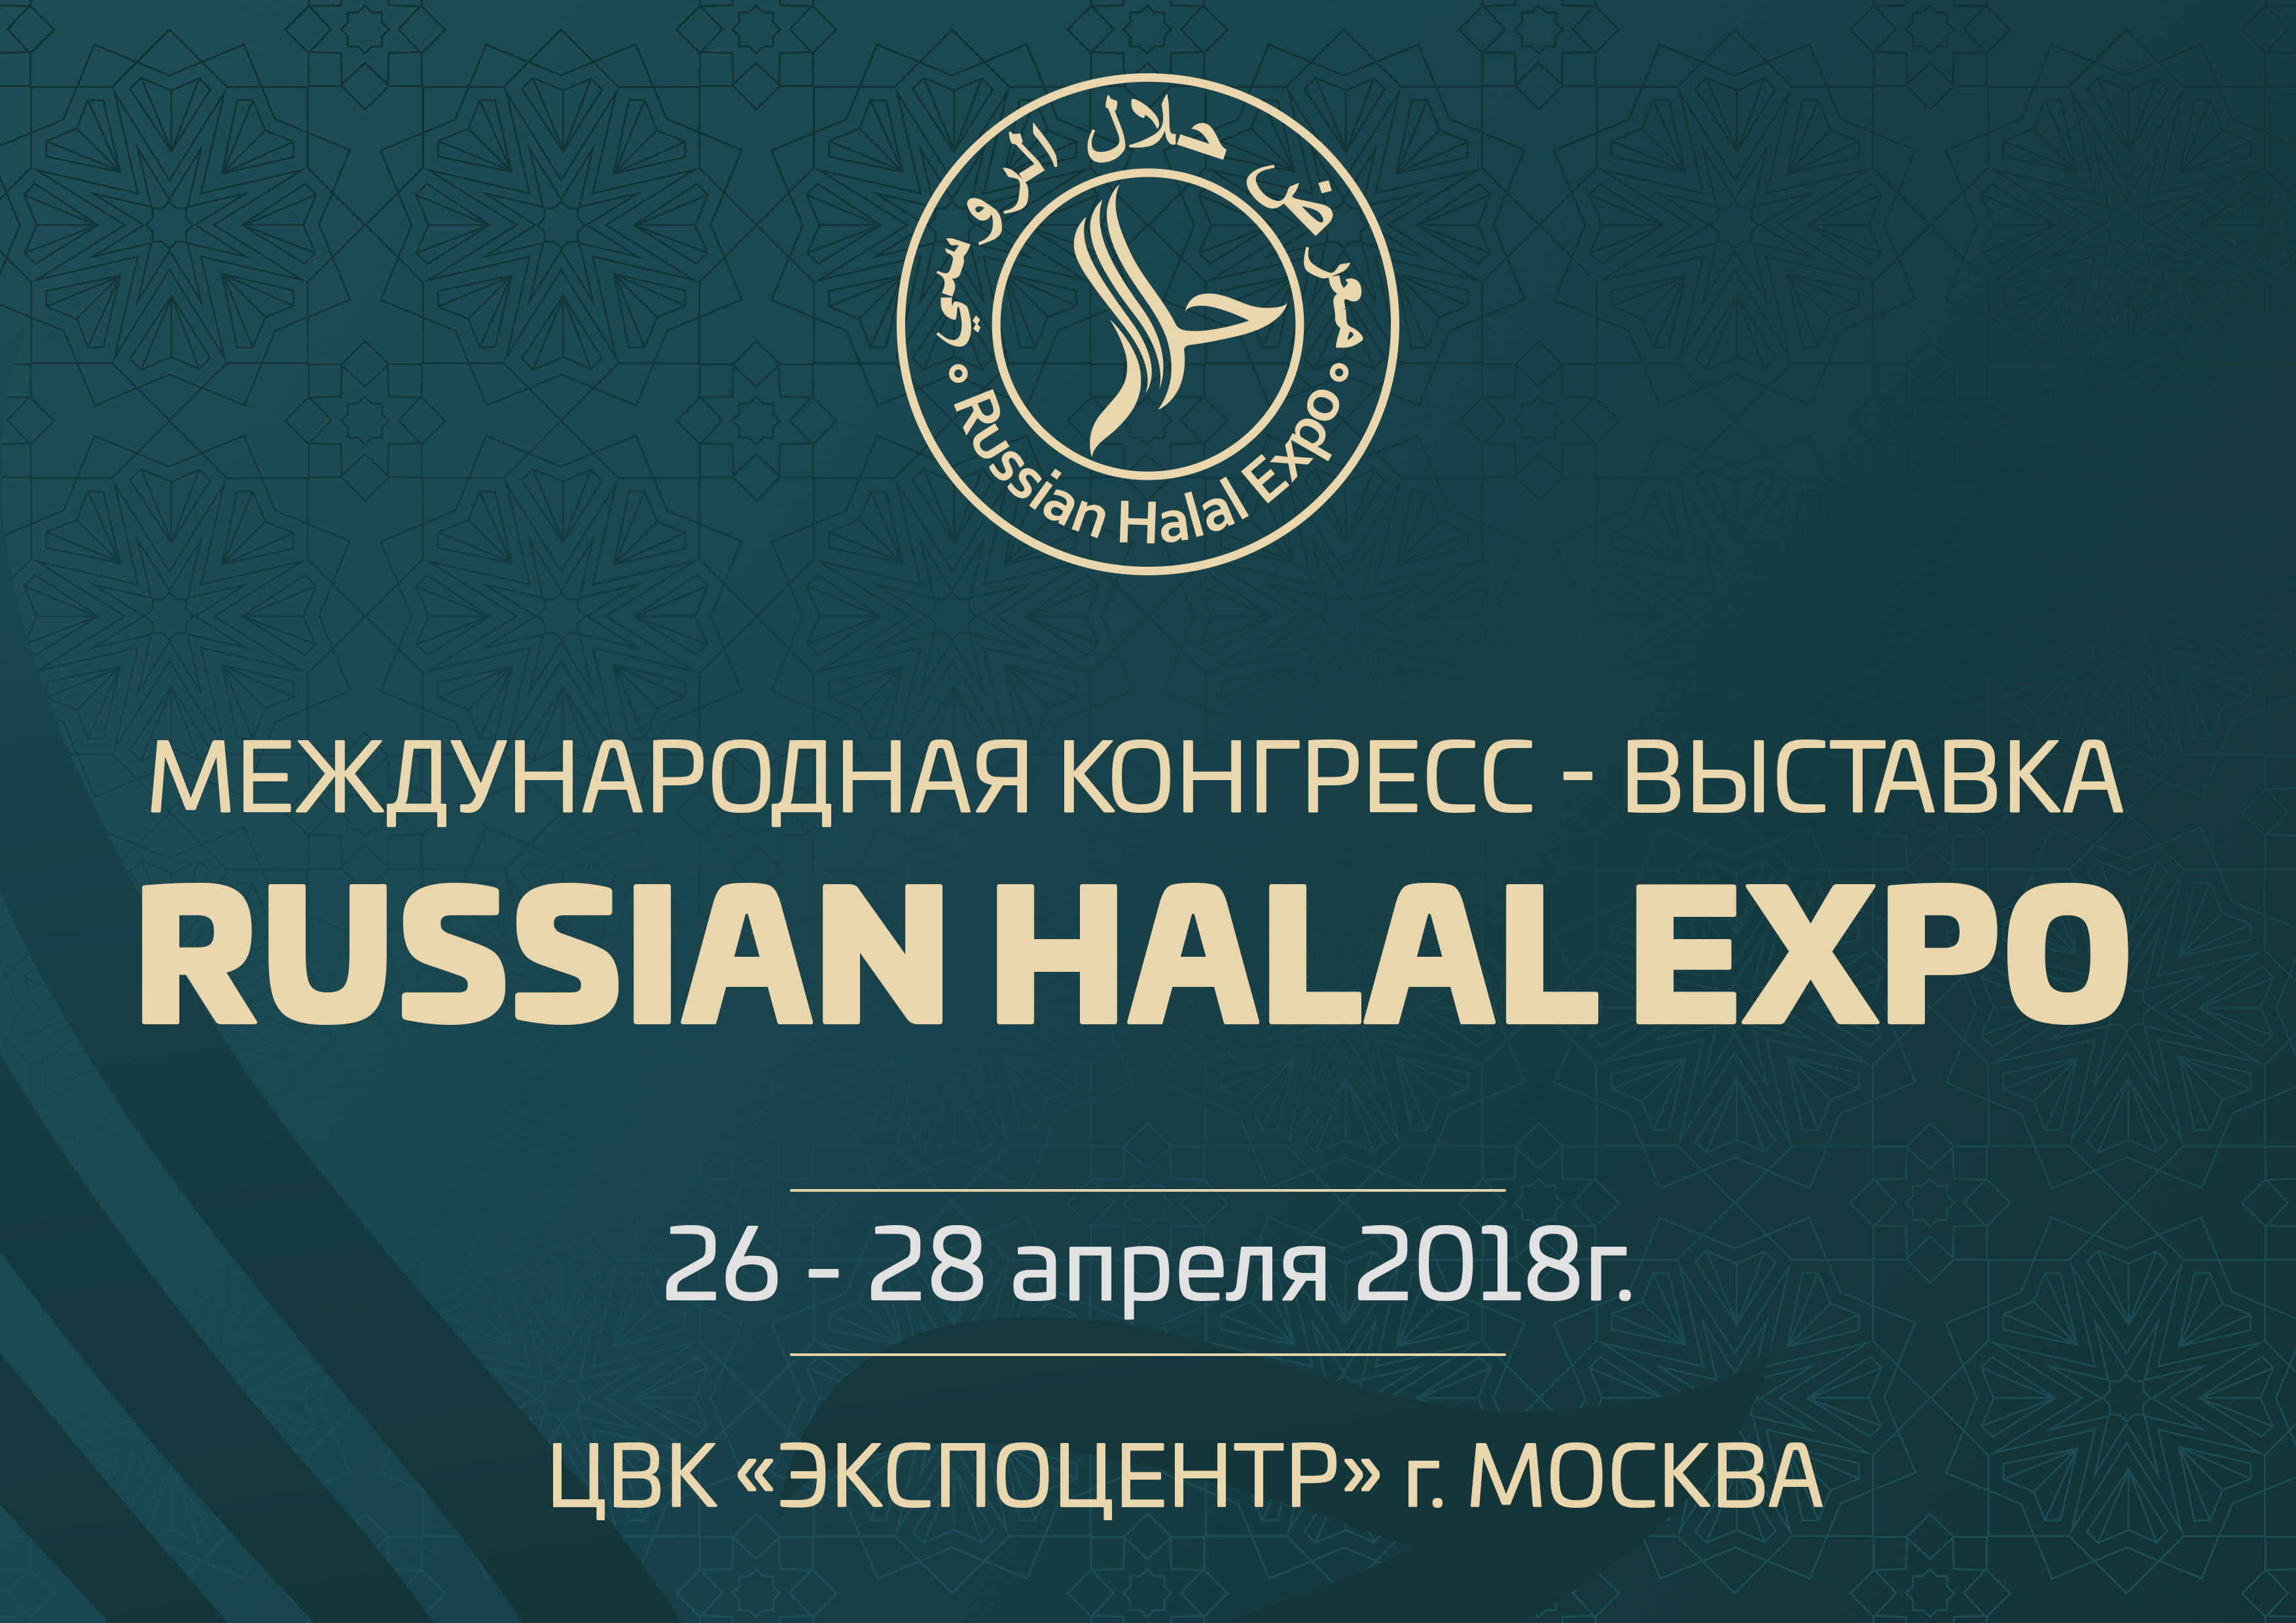 International Congress-exhibition "Russian Halal Expo 2018"